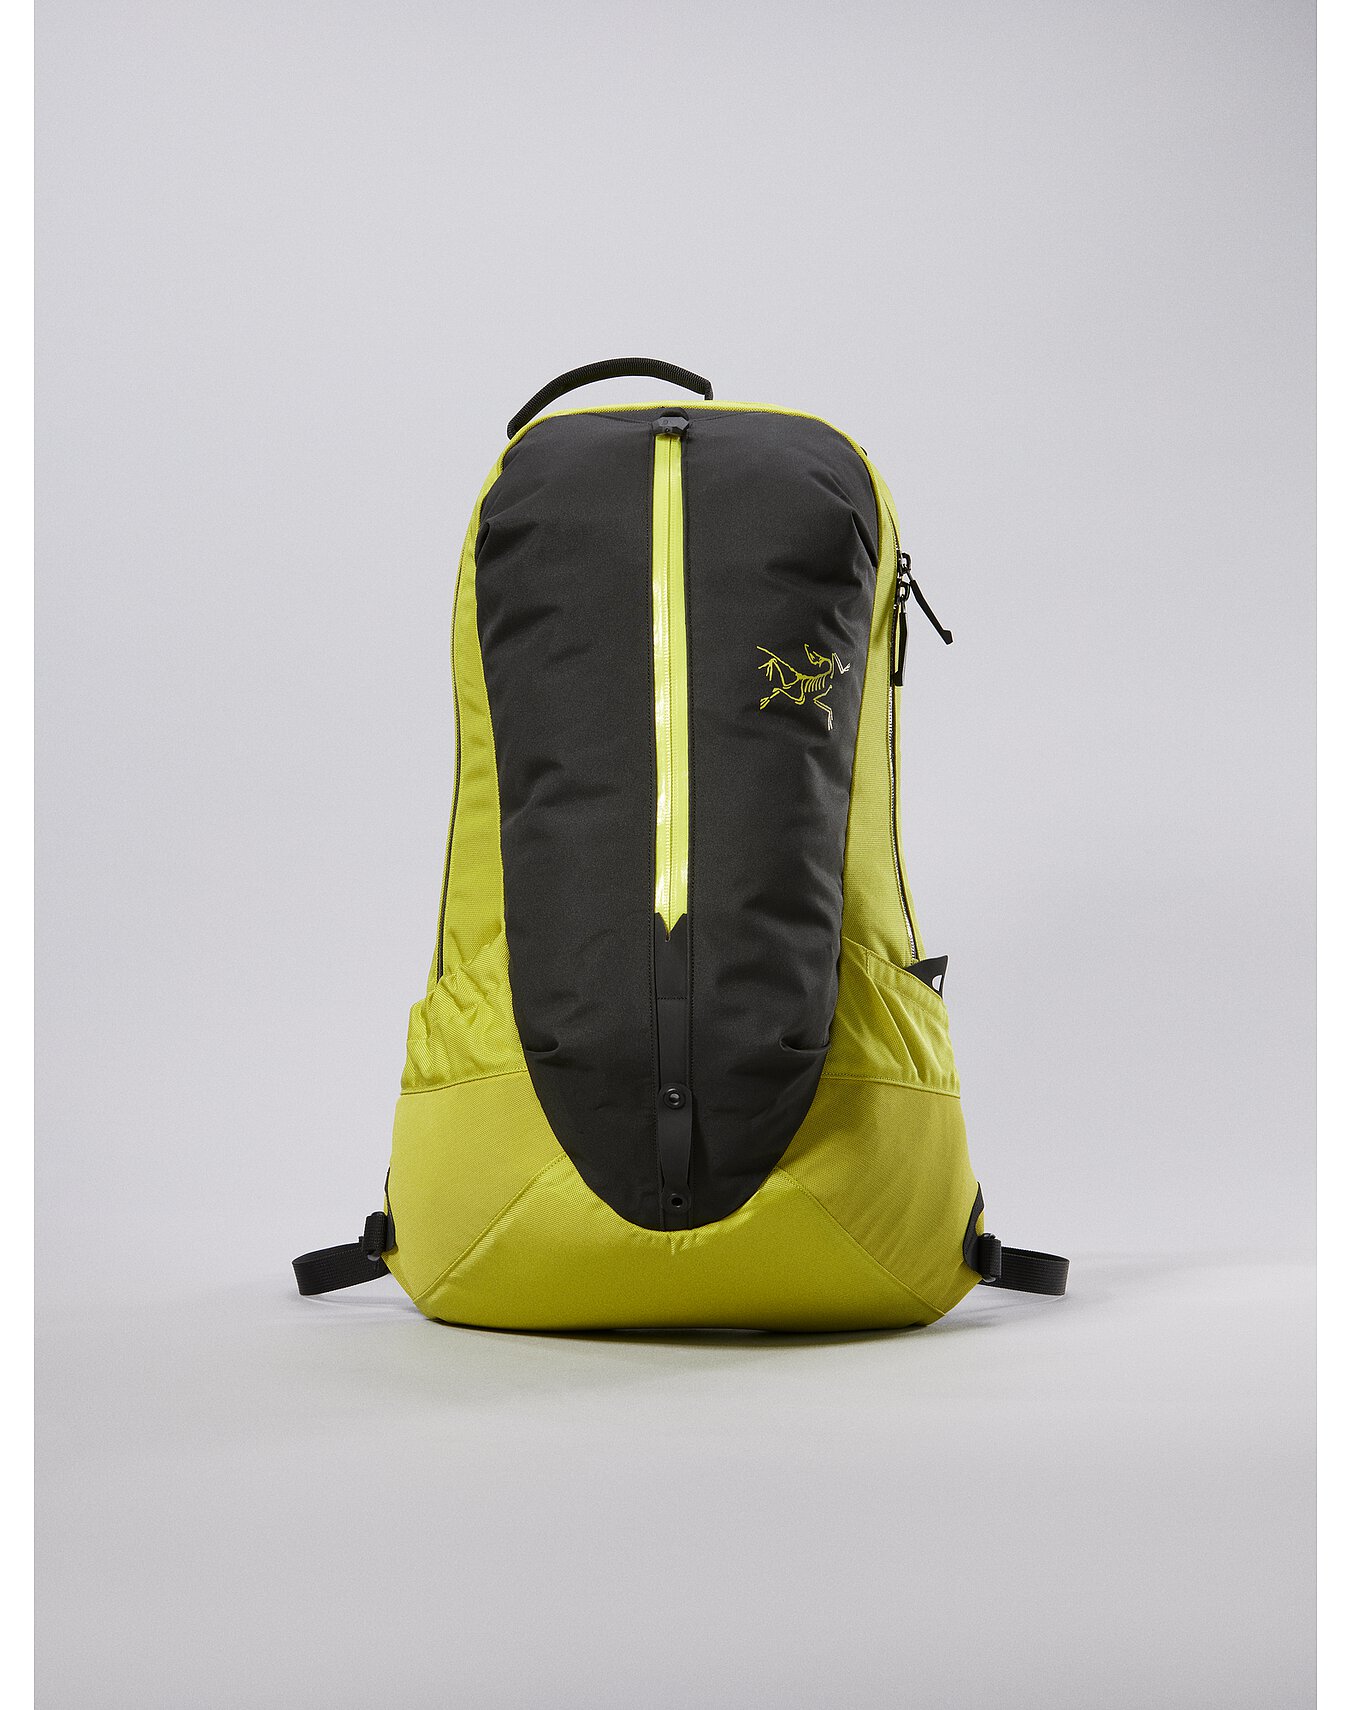 Arro 22 Backpack | Arc'teryx